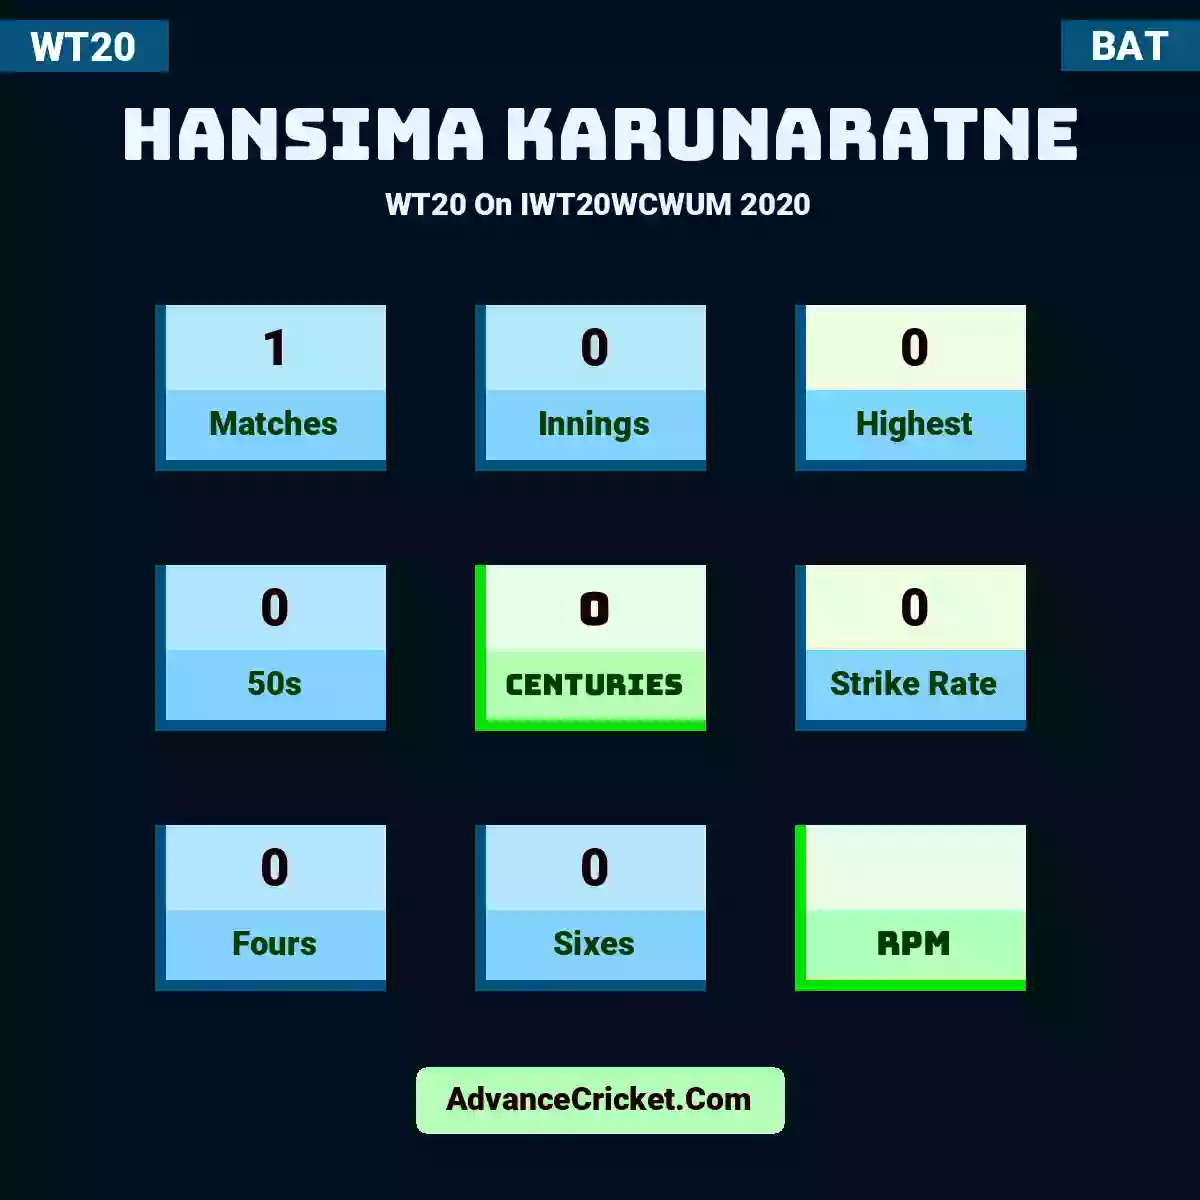 Hansima Karunaratne WT20  On IWT20WCWUM 2020, Hansima Karunaratne played 1 matches, scored 0 runs as highest, 0 half-centuries, and 0 centuries, with a strike rate of 0. H.Karunaratne hit 0 fours and 0 sixes.